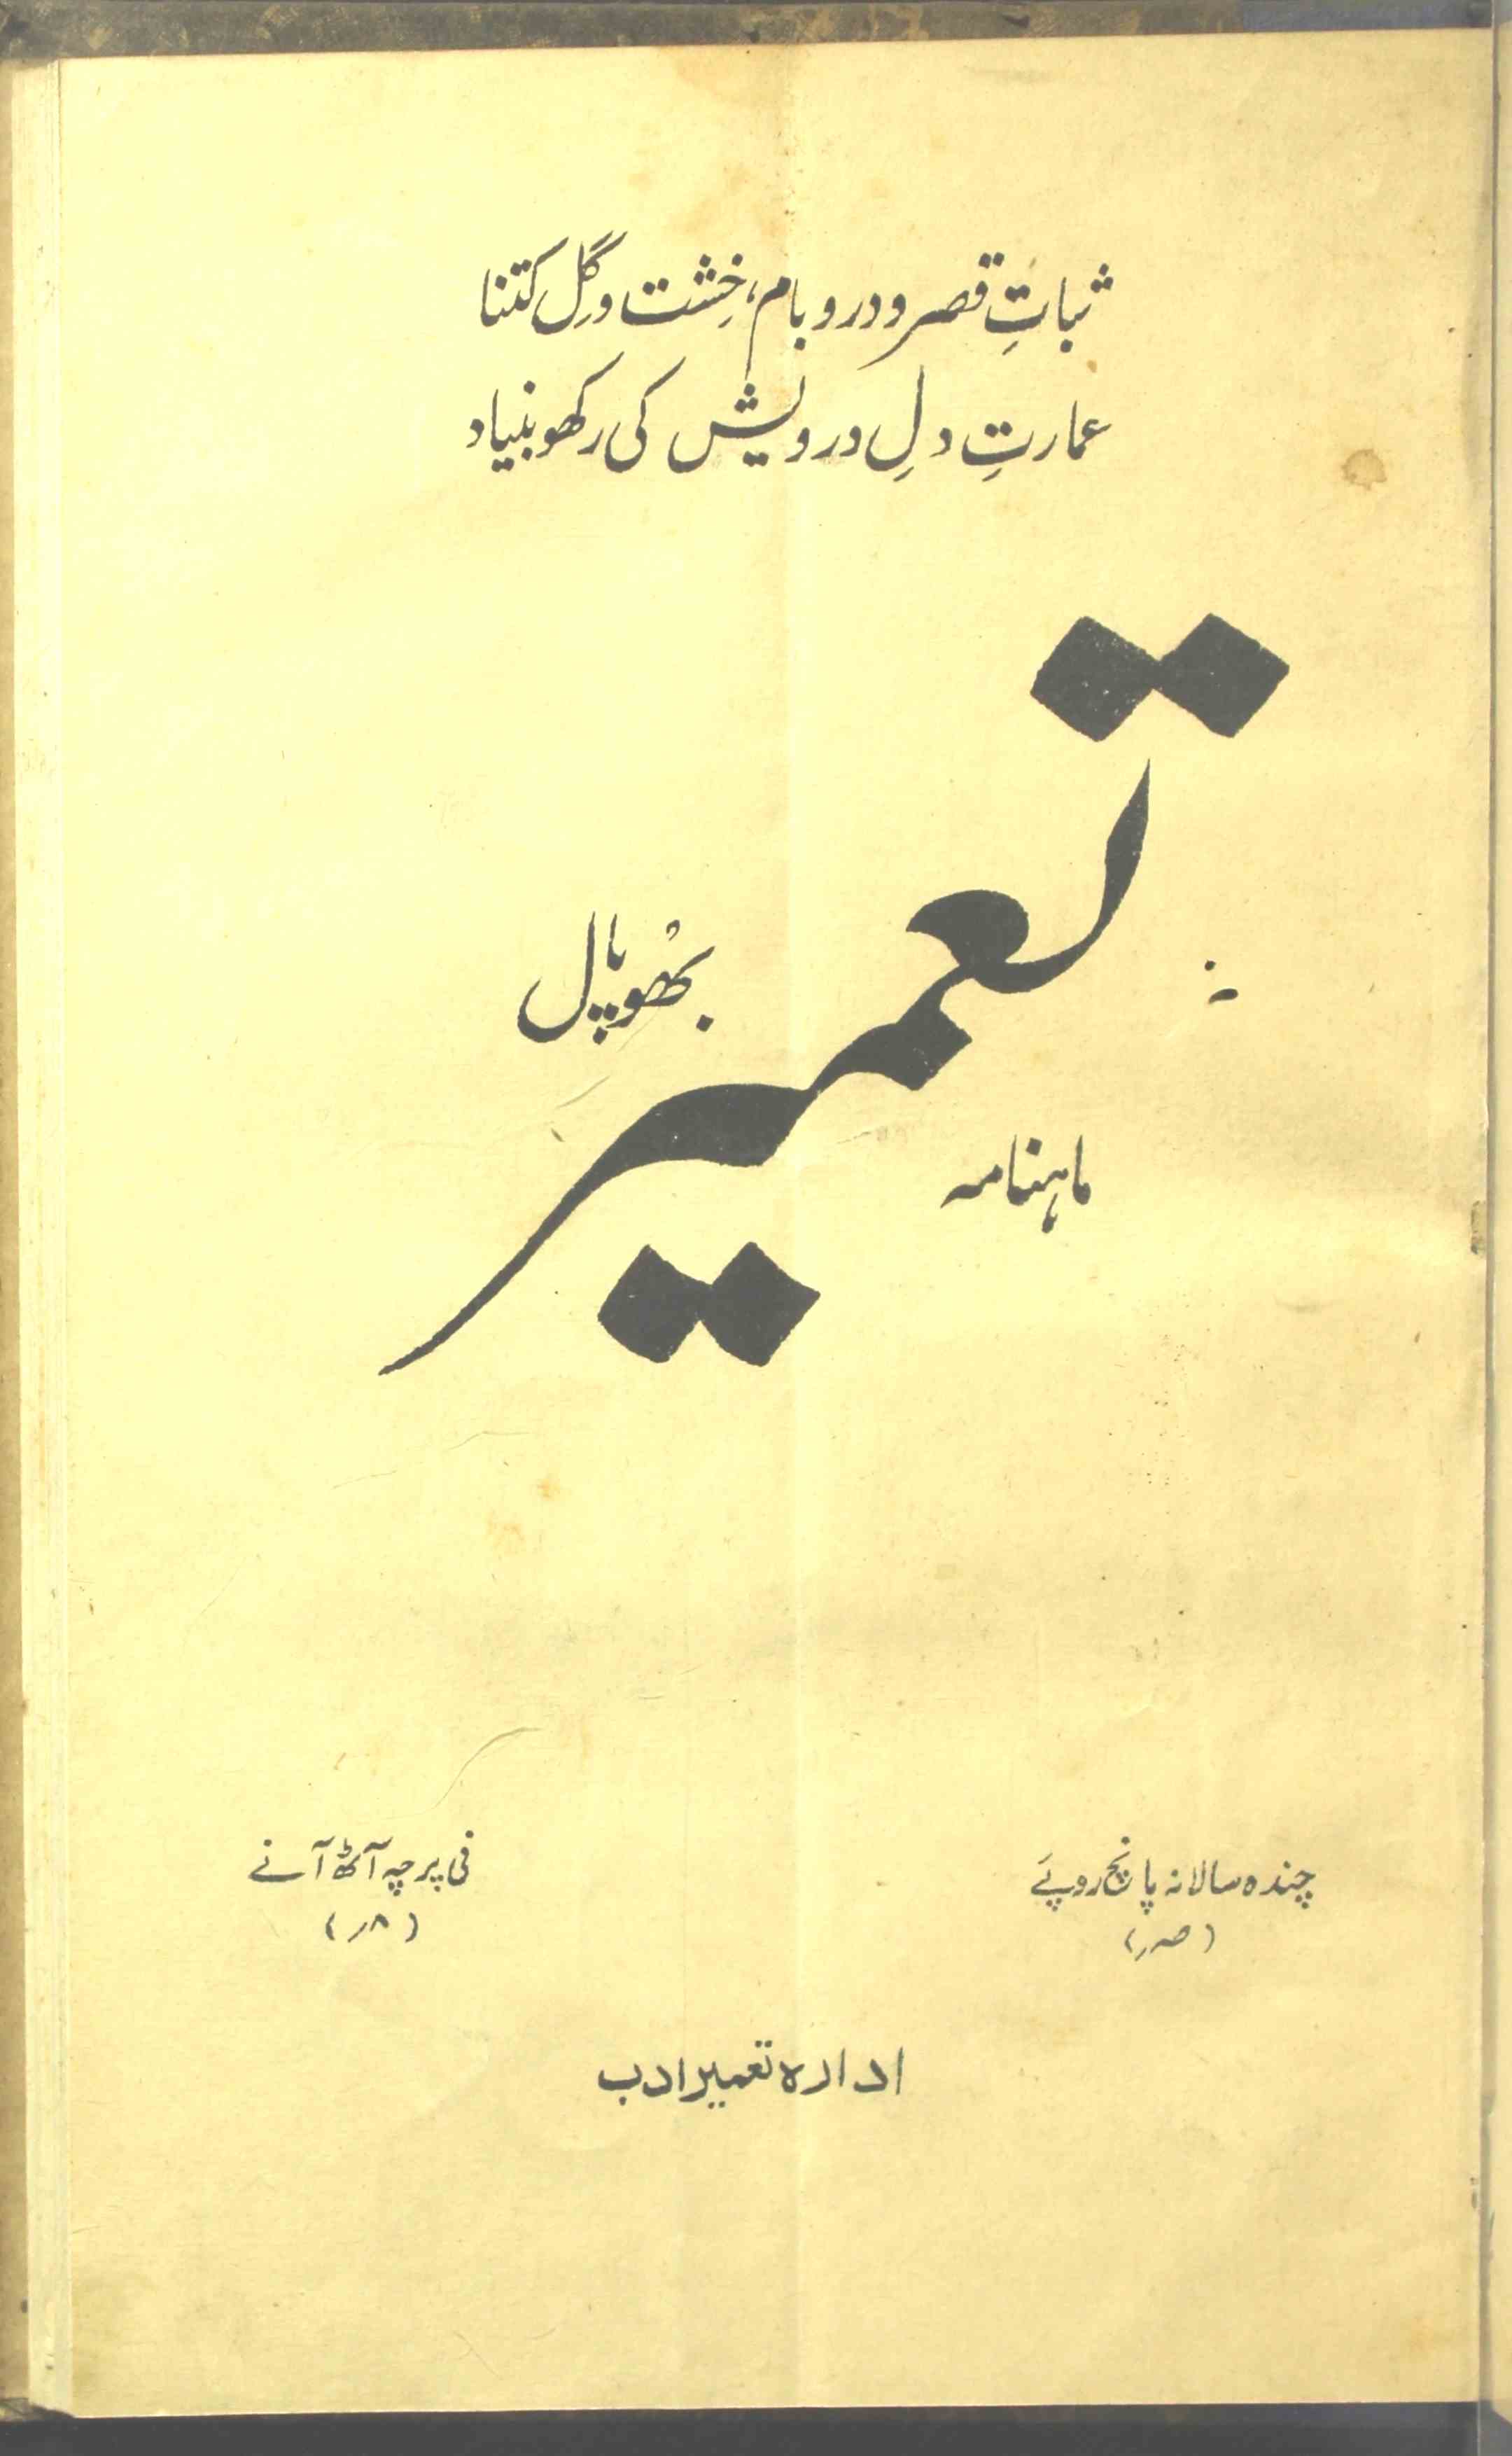 Tameer Jild 1 Shumara 3 March 1947-Shumara Number-003